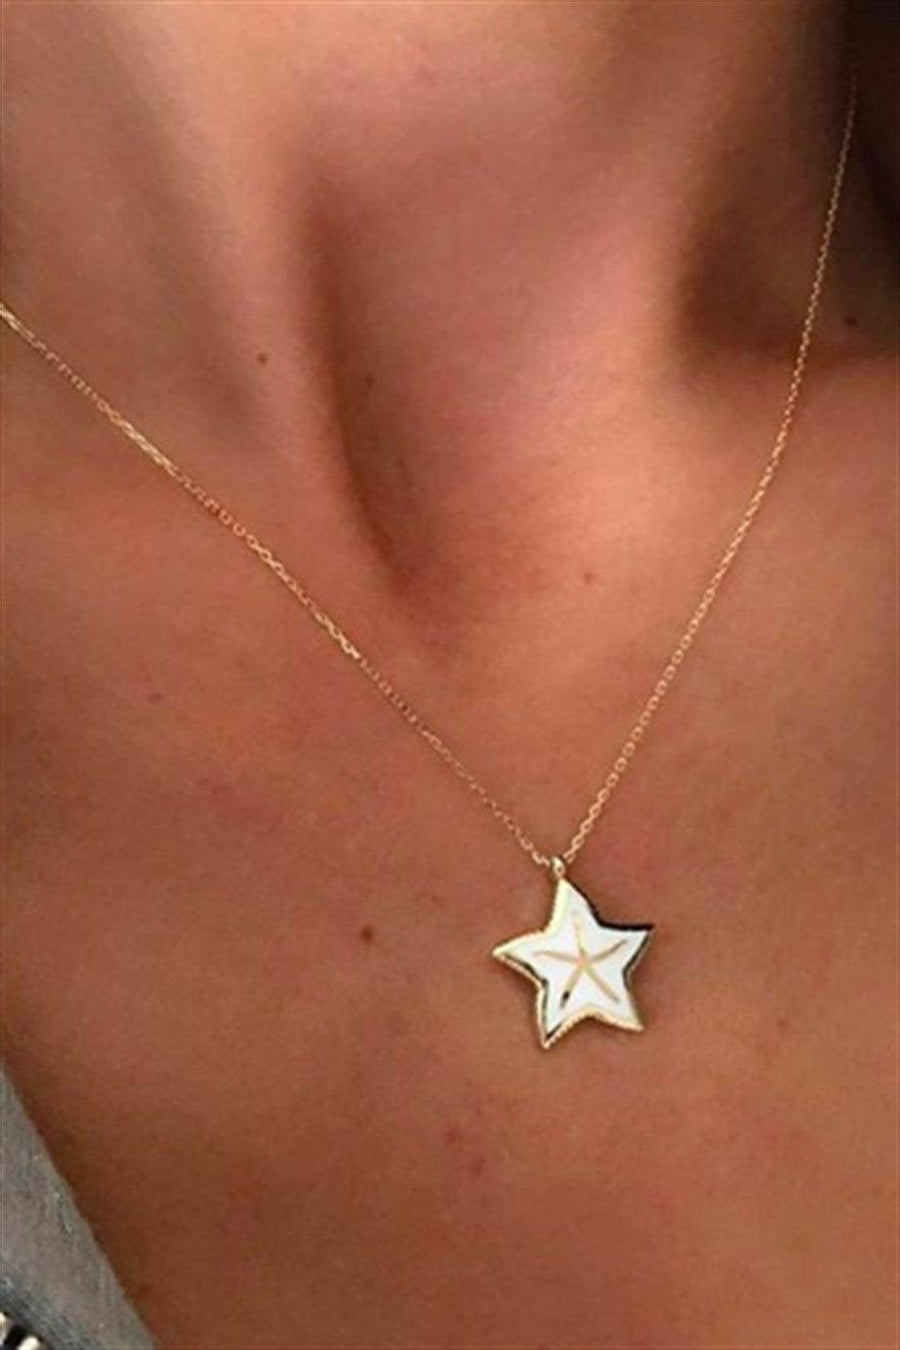 Golden Enamel Star Necklace